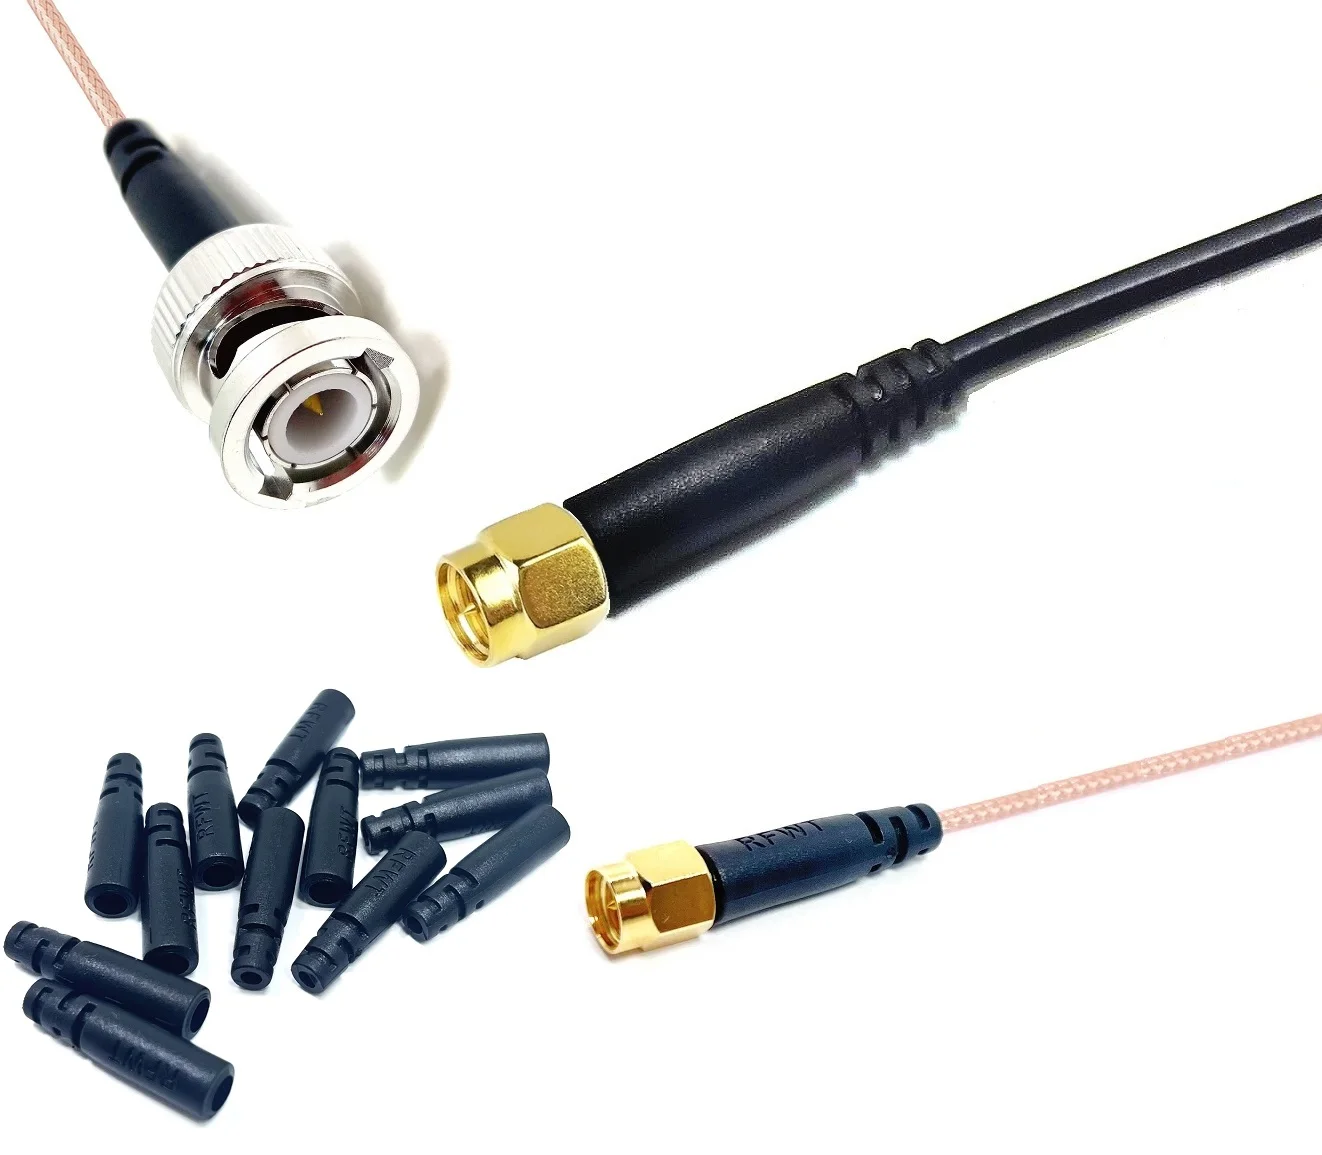 RF connectors BNC SMA UHF RG316 RG174 RG58 LMR195 LMR200 RG179 LMR240 RG141 Strain relief coax cable boots details